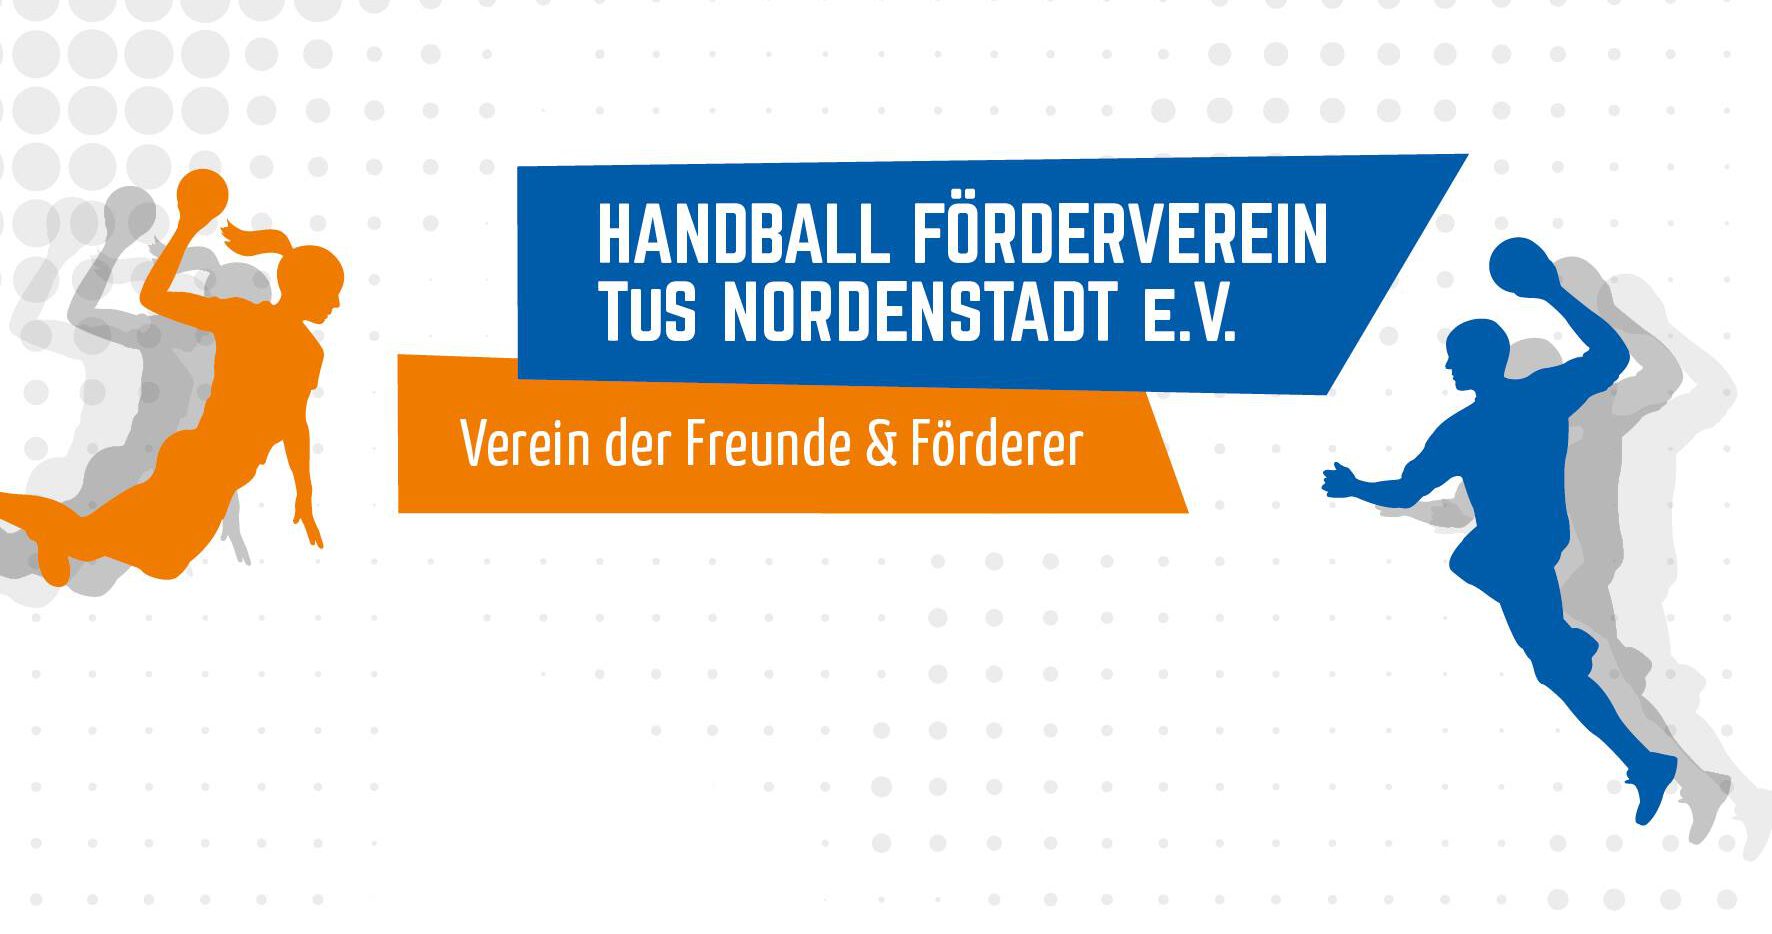 https://tus-nordenstadt-handball.de/wp-content/uploads/2023/01/foerderverein-e1673096220231.jpg